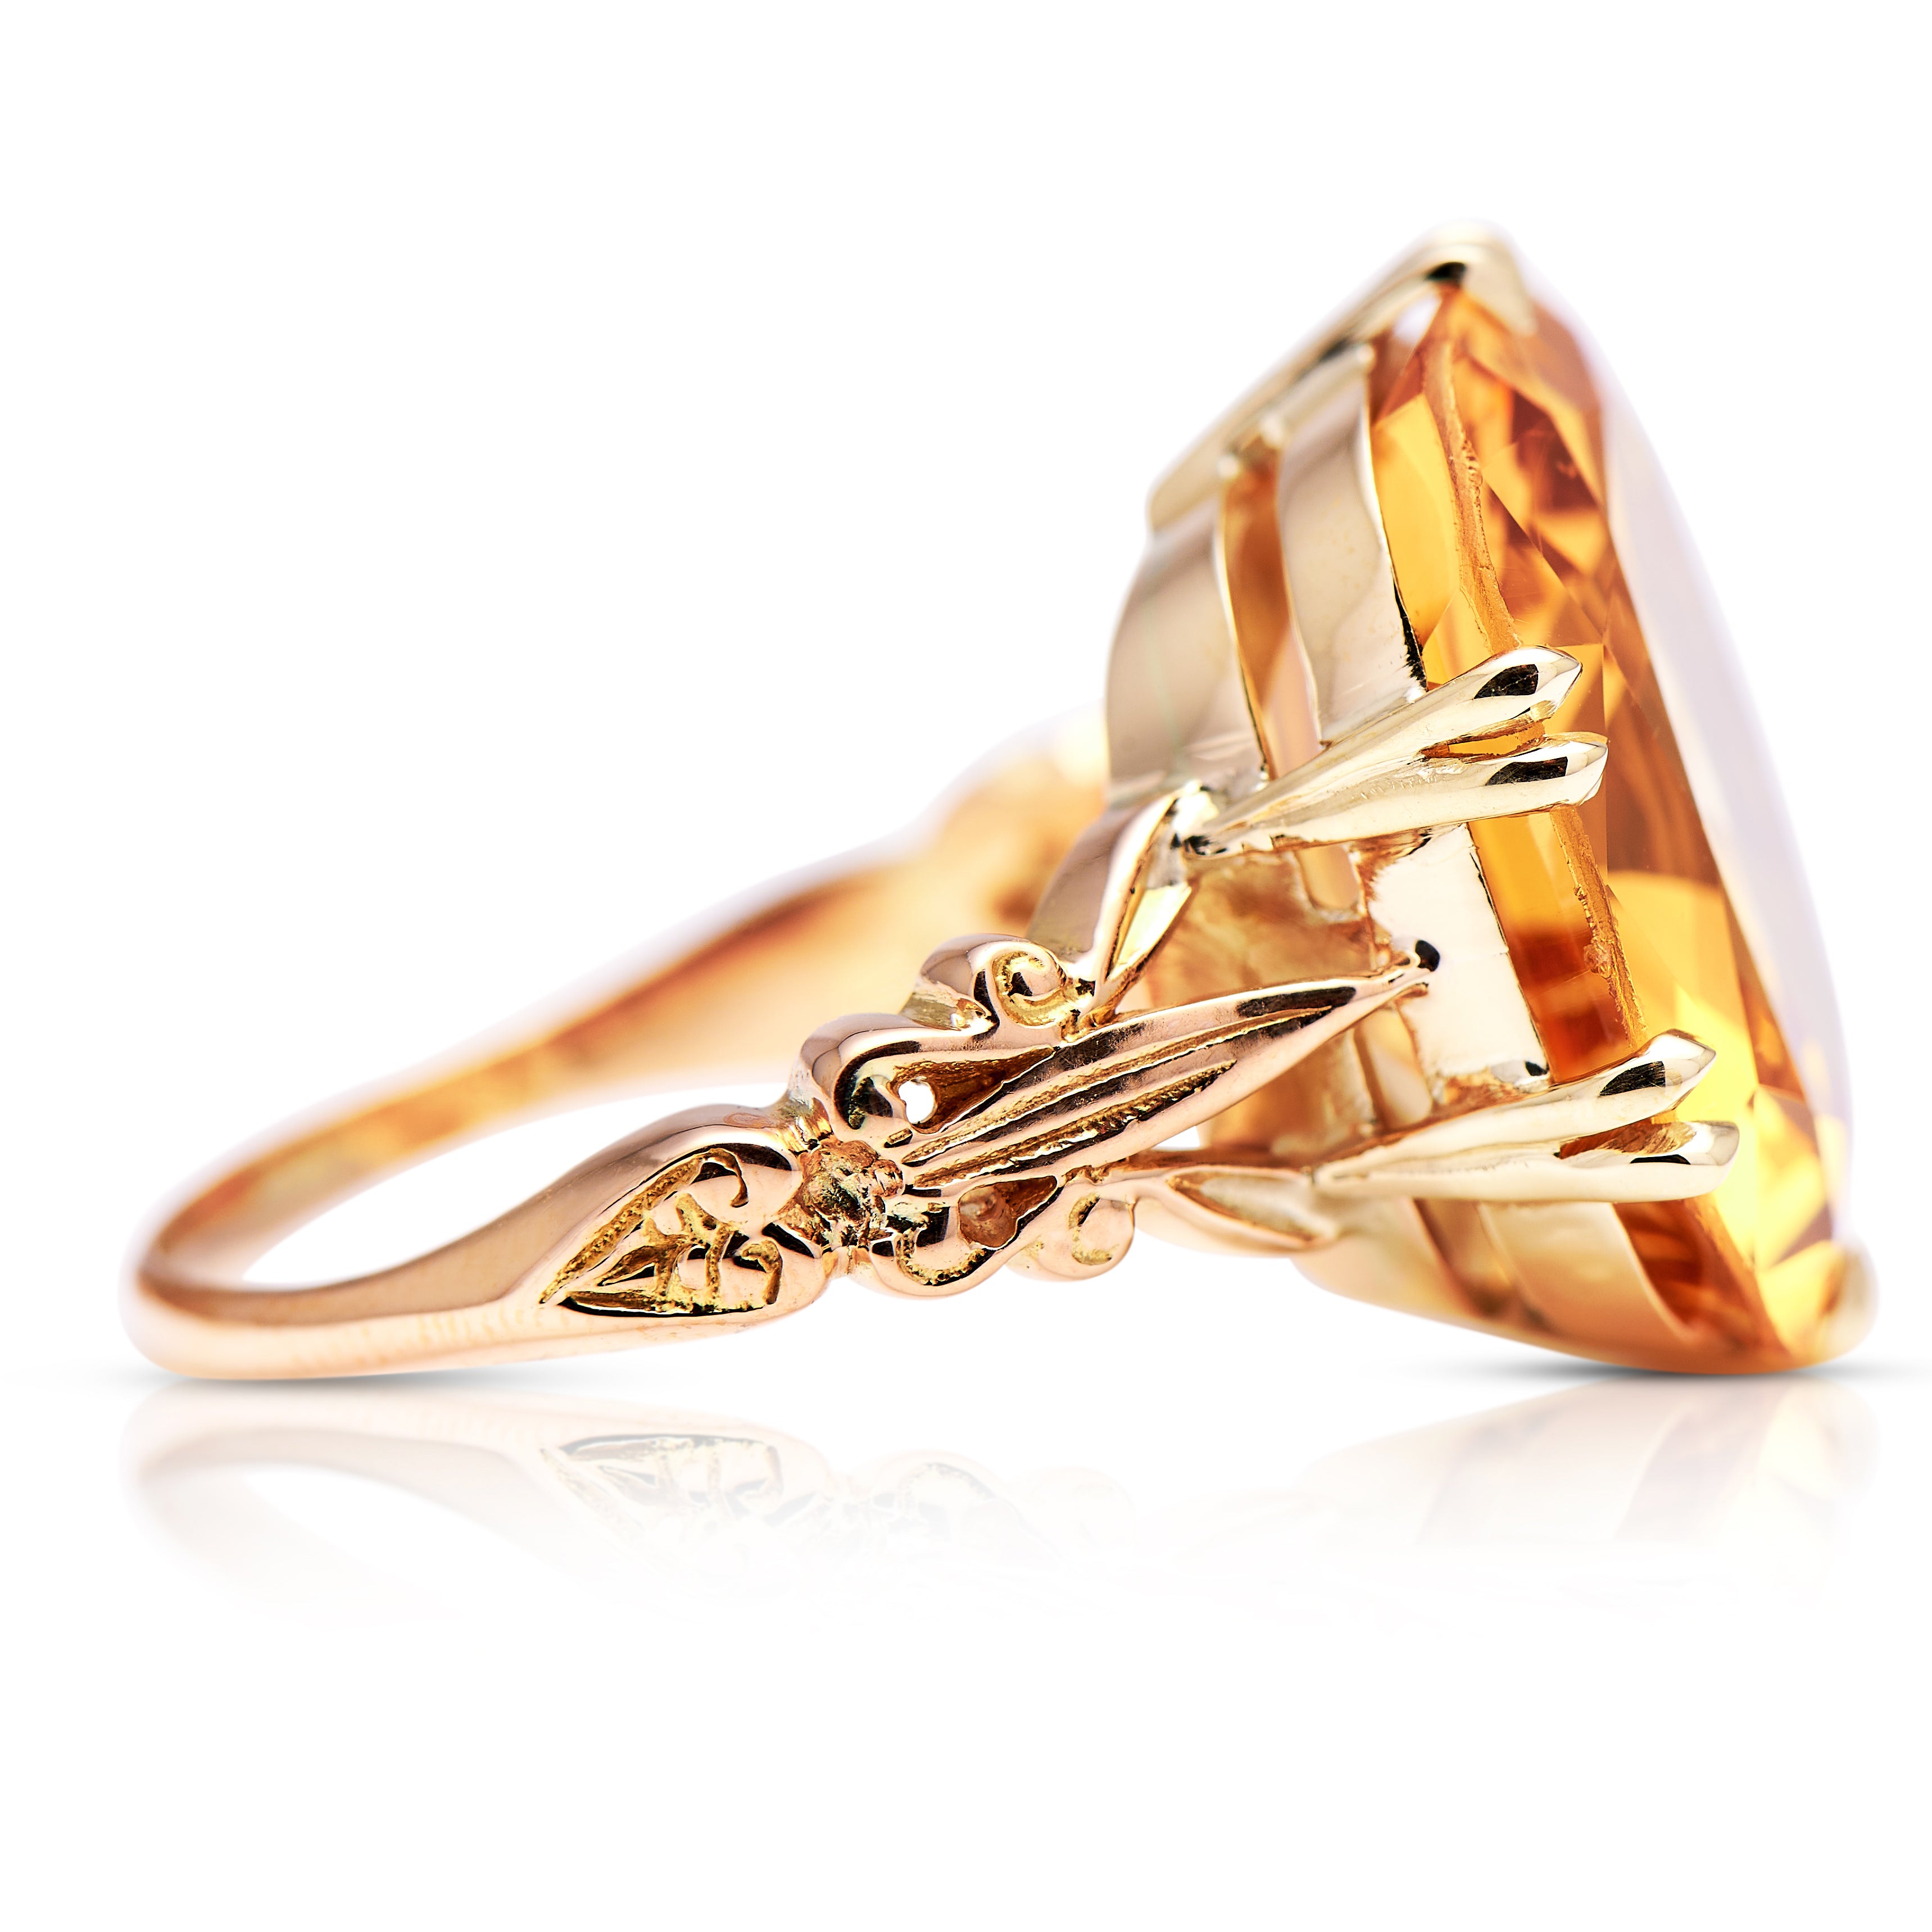 Premium Quality Ceylon Yellow Sapphire Ring in 22k Solid Gold - Gleam Jewels